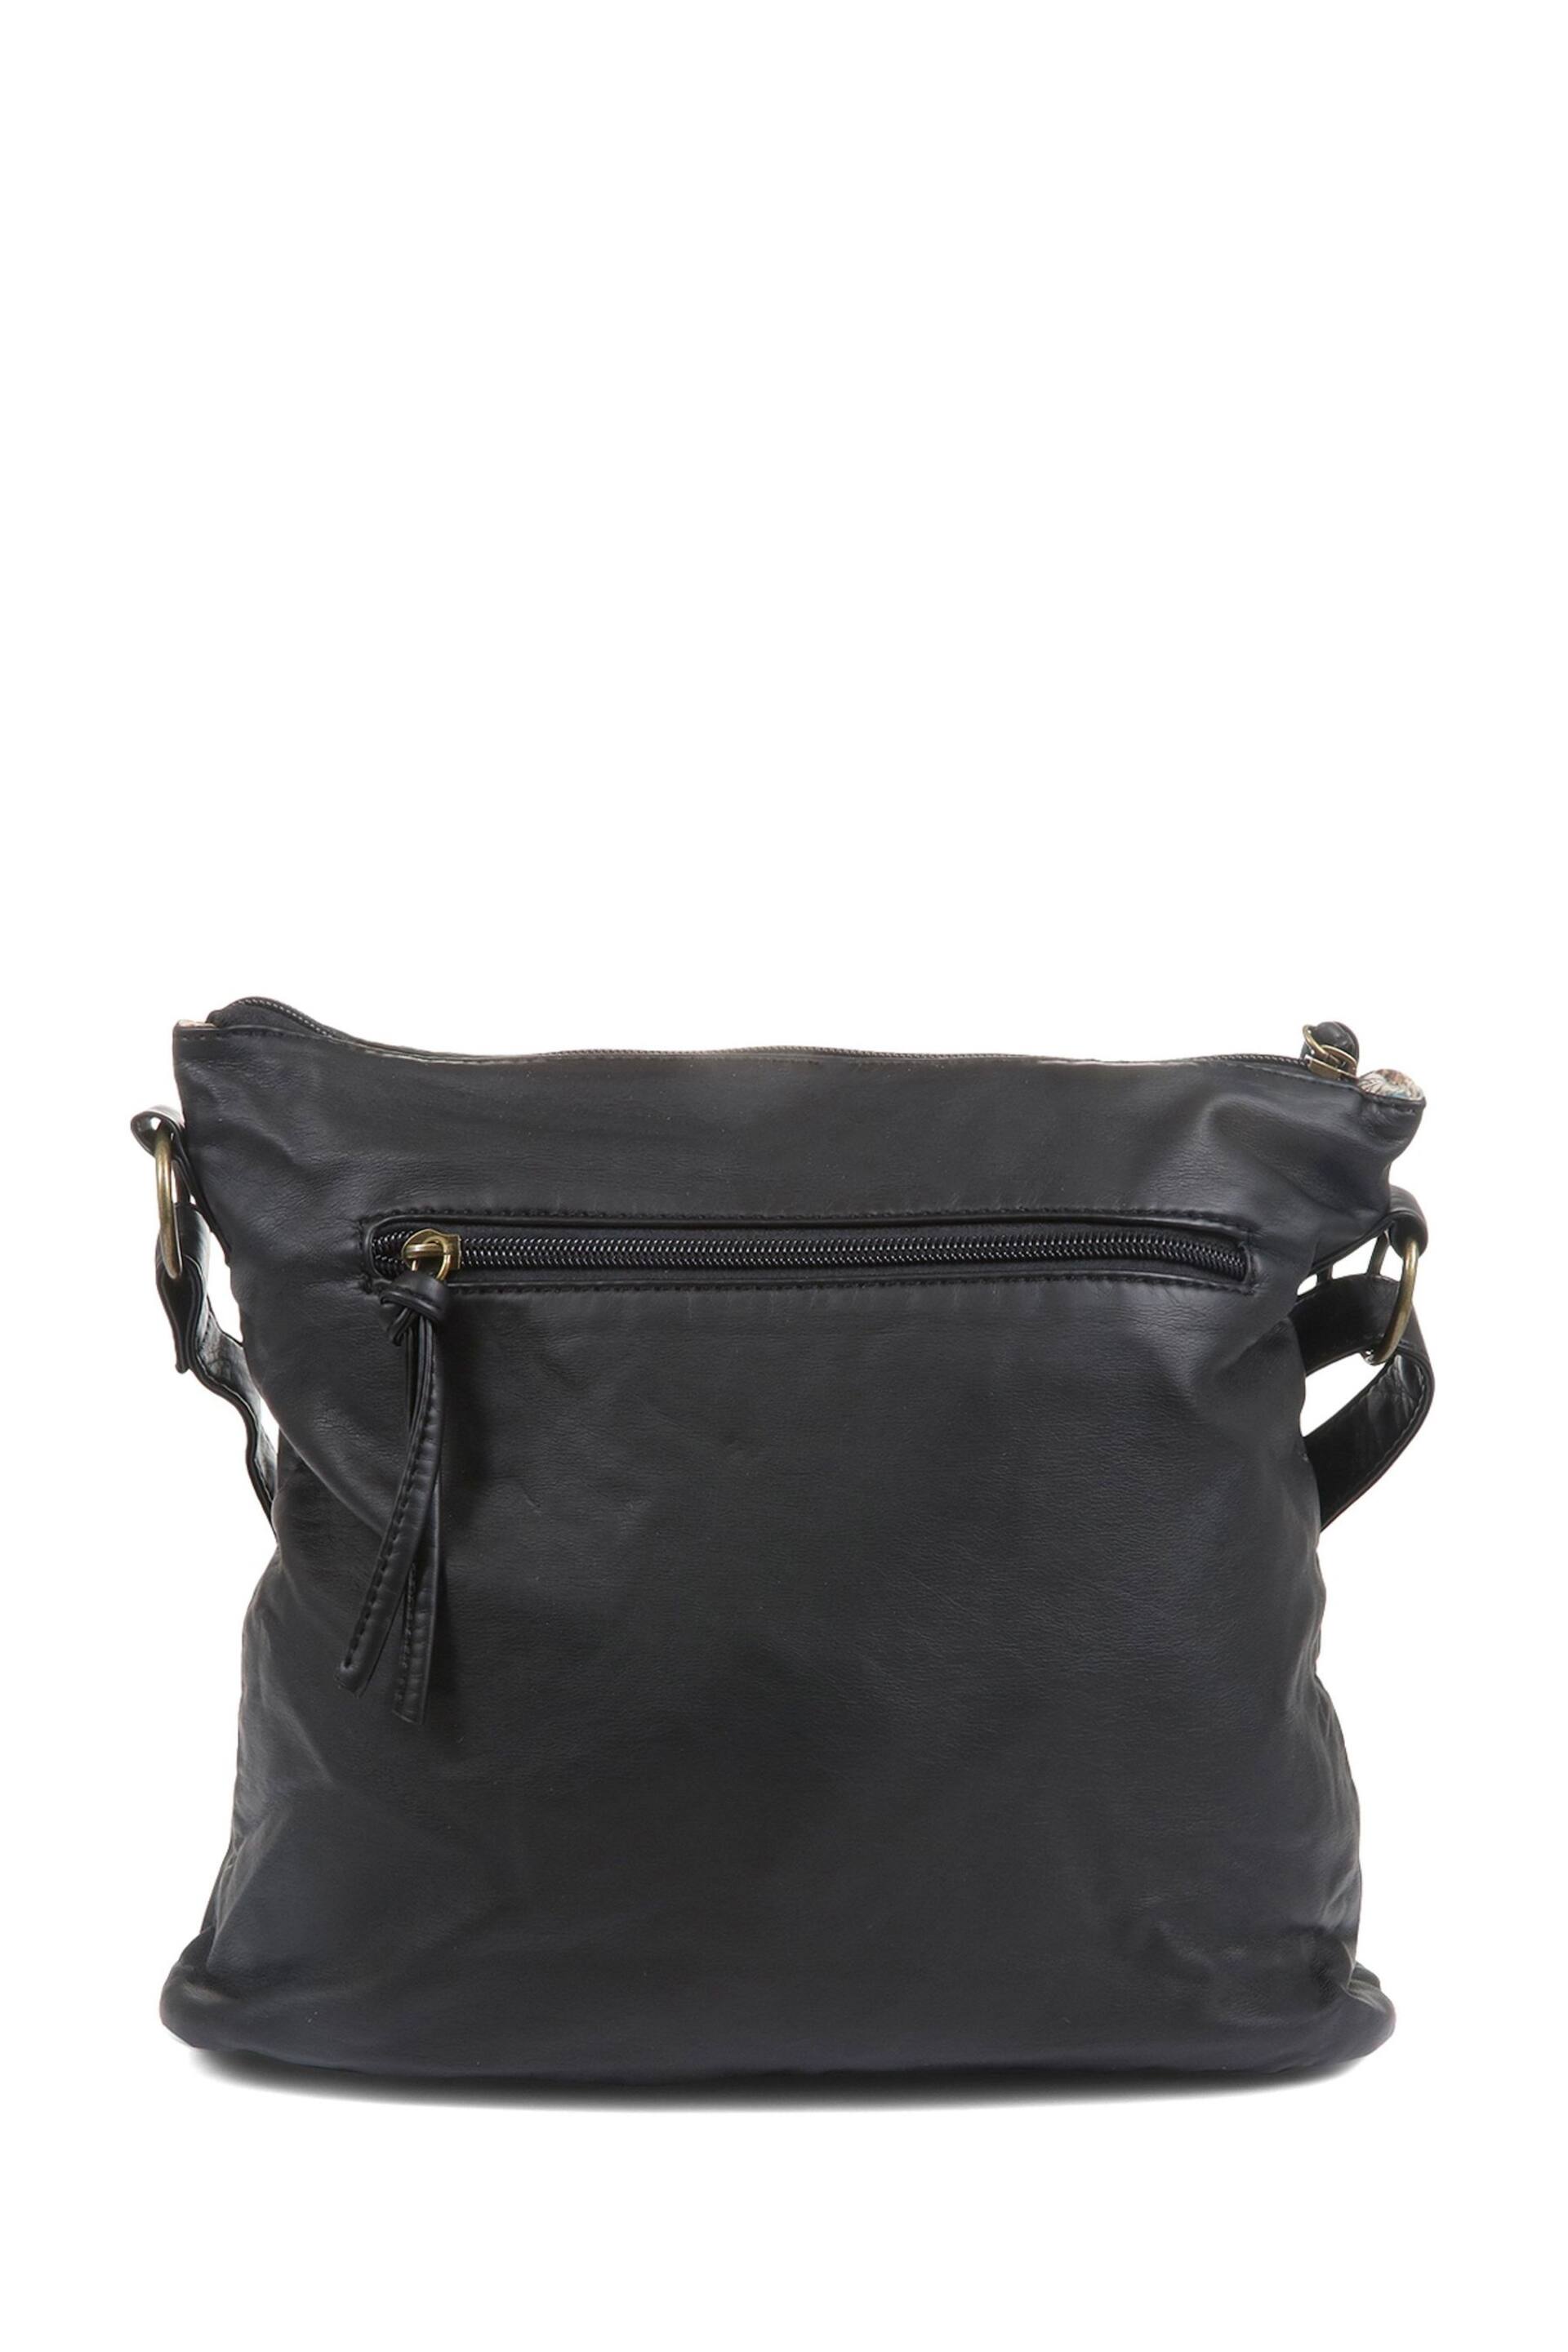 Pavers Cross-Body Black Bag - Image 2 of 3